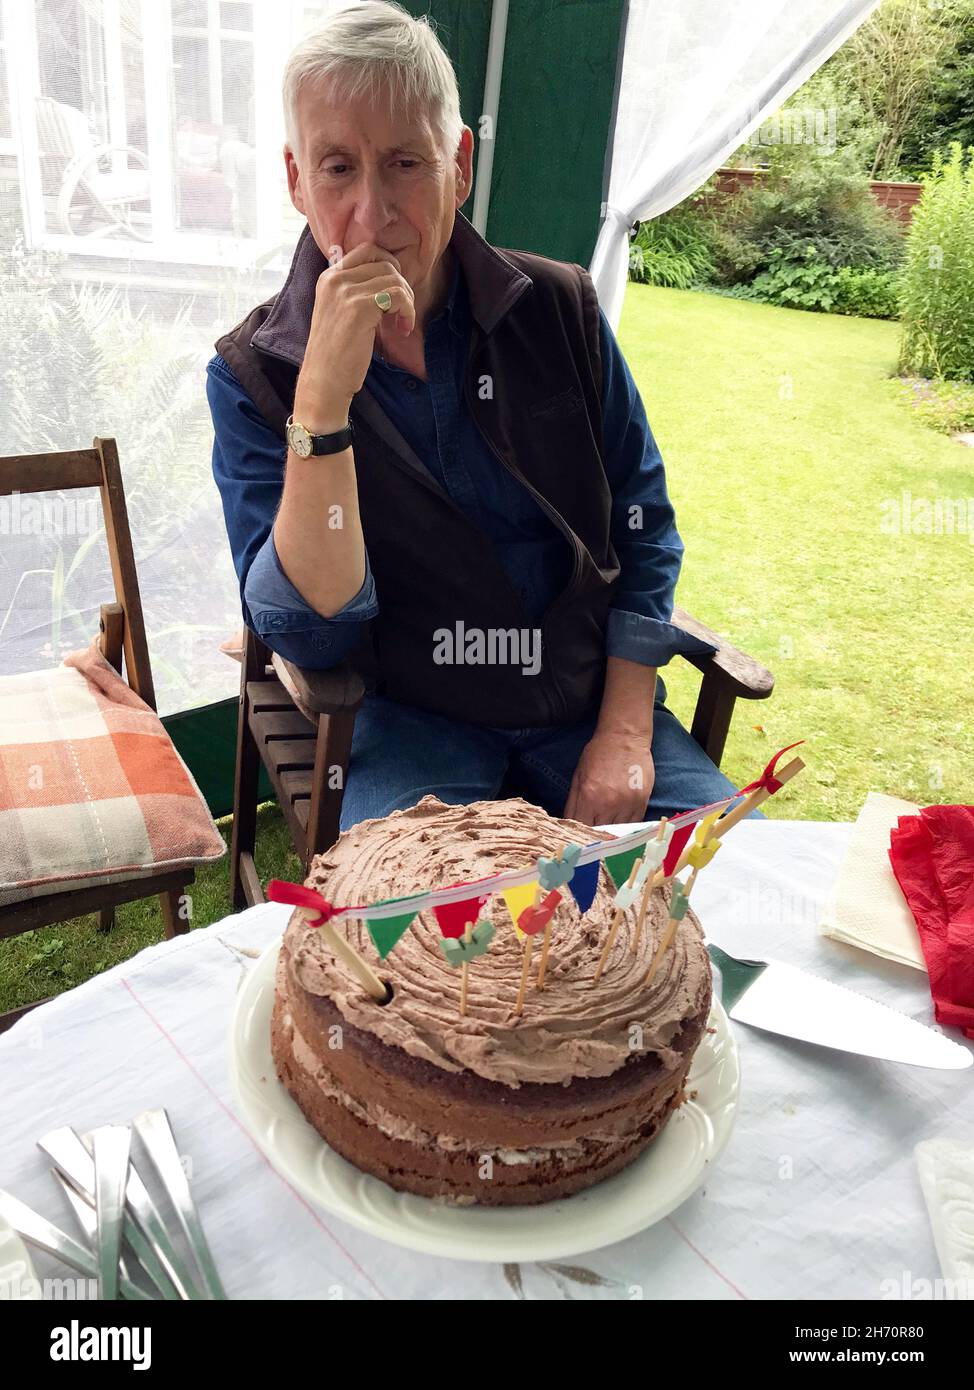 man with chocolate birthday cake in garden gazeebo Stock Photo